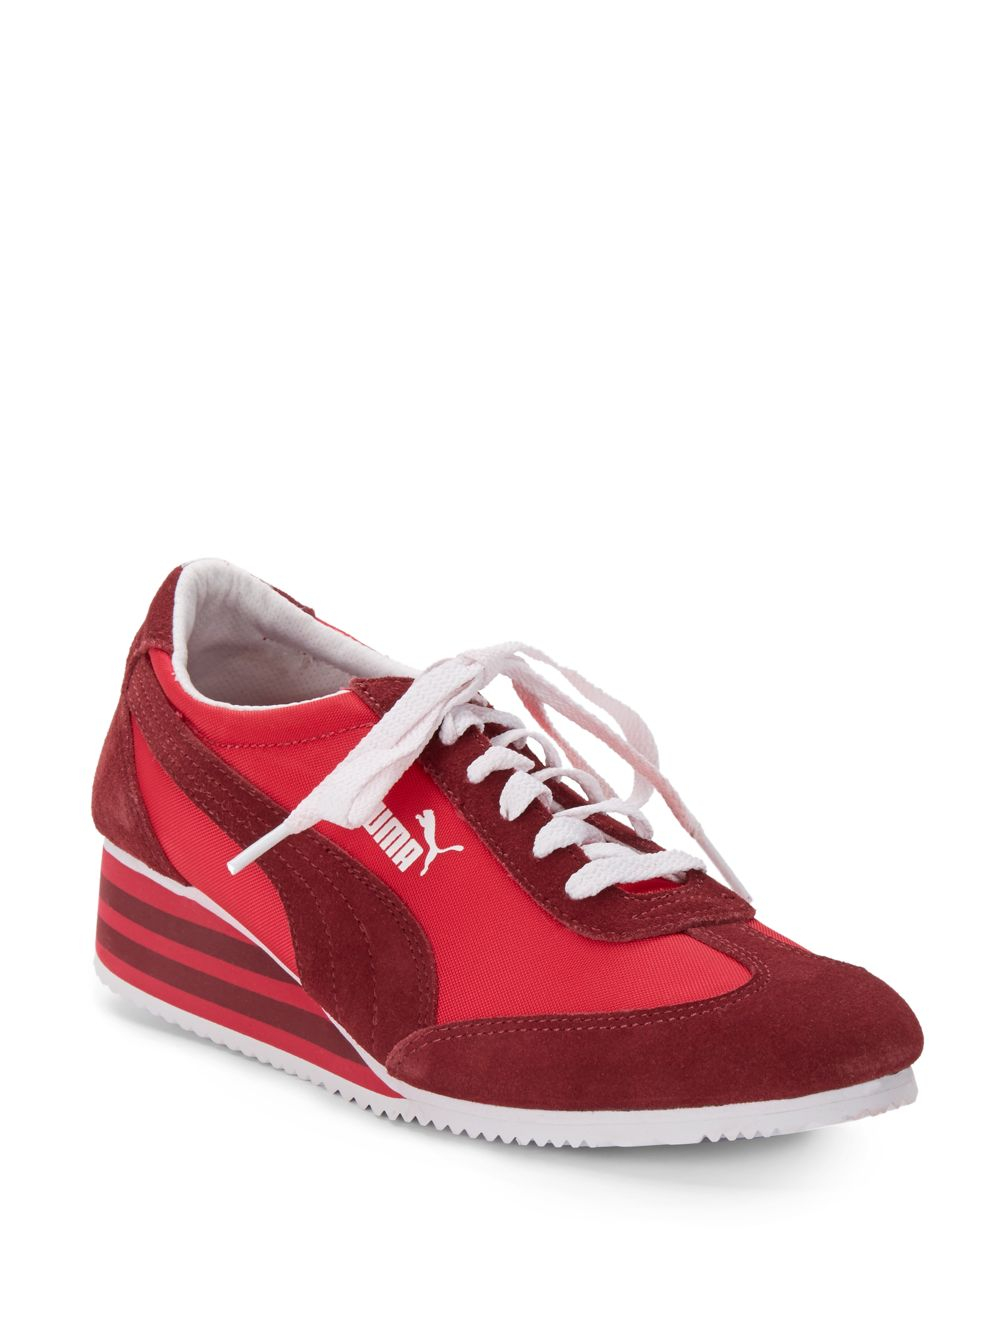 PUMA Caroline Striped Wedge Sneakers in Red | Lyst